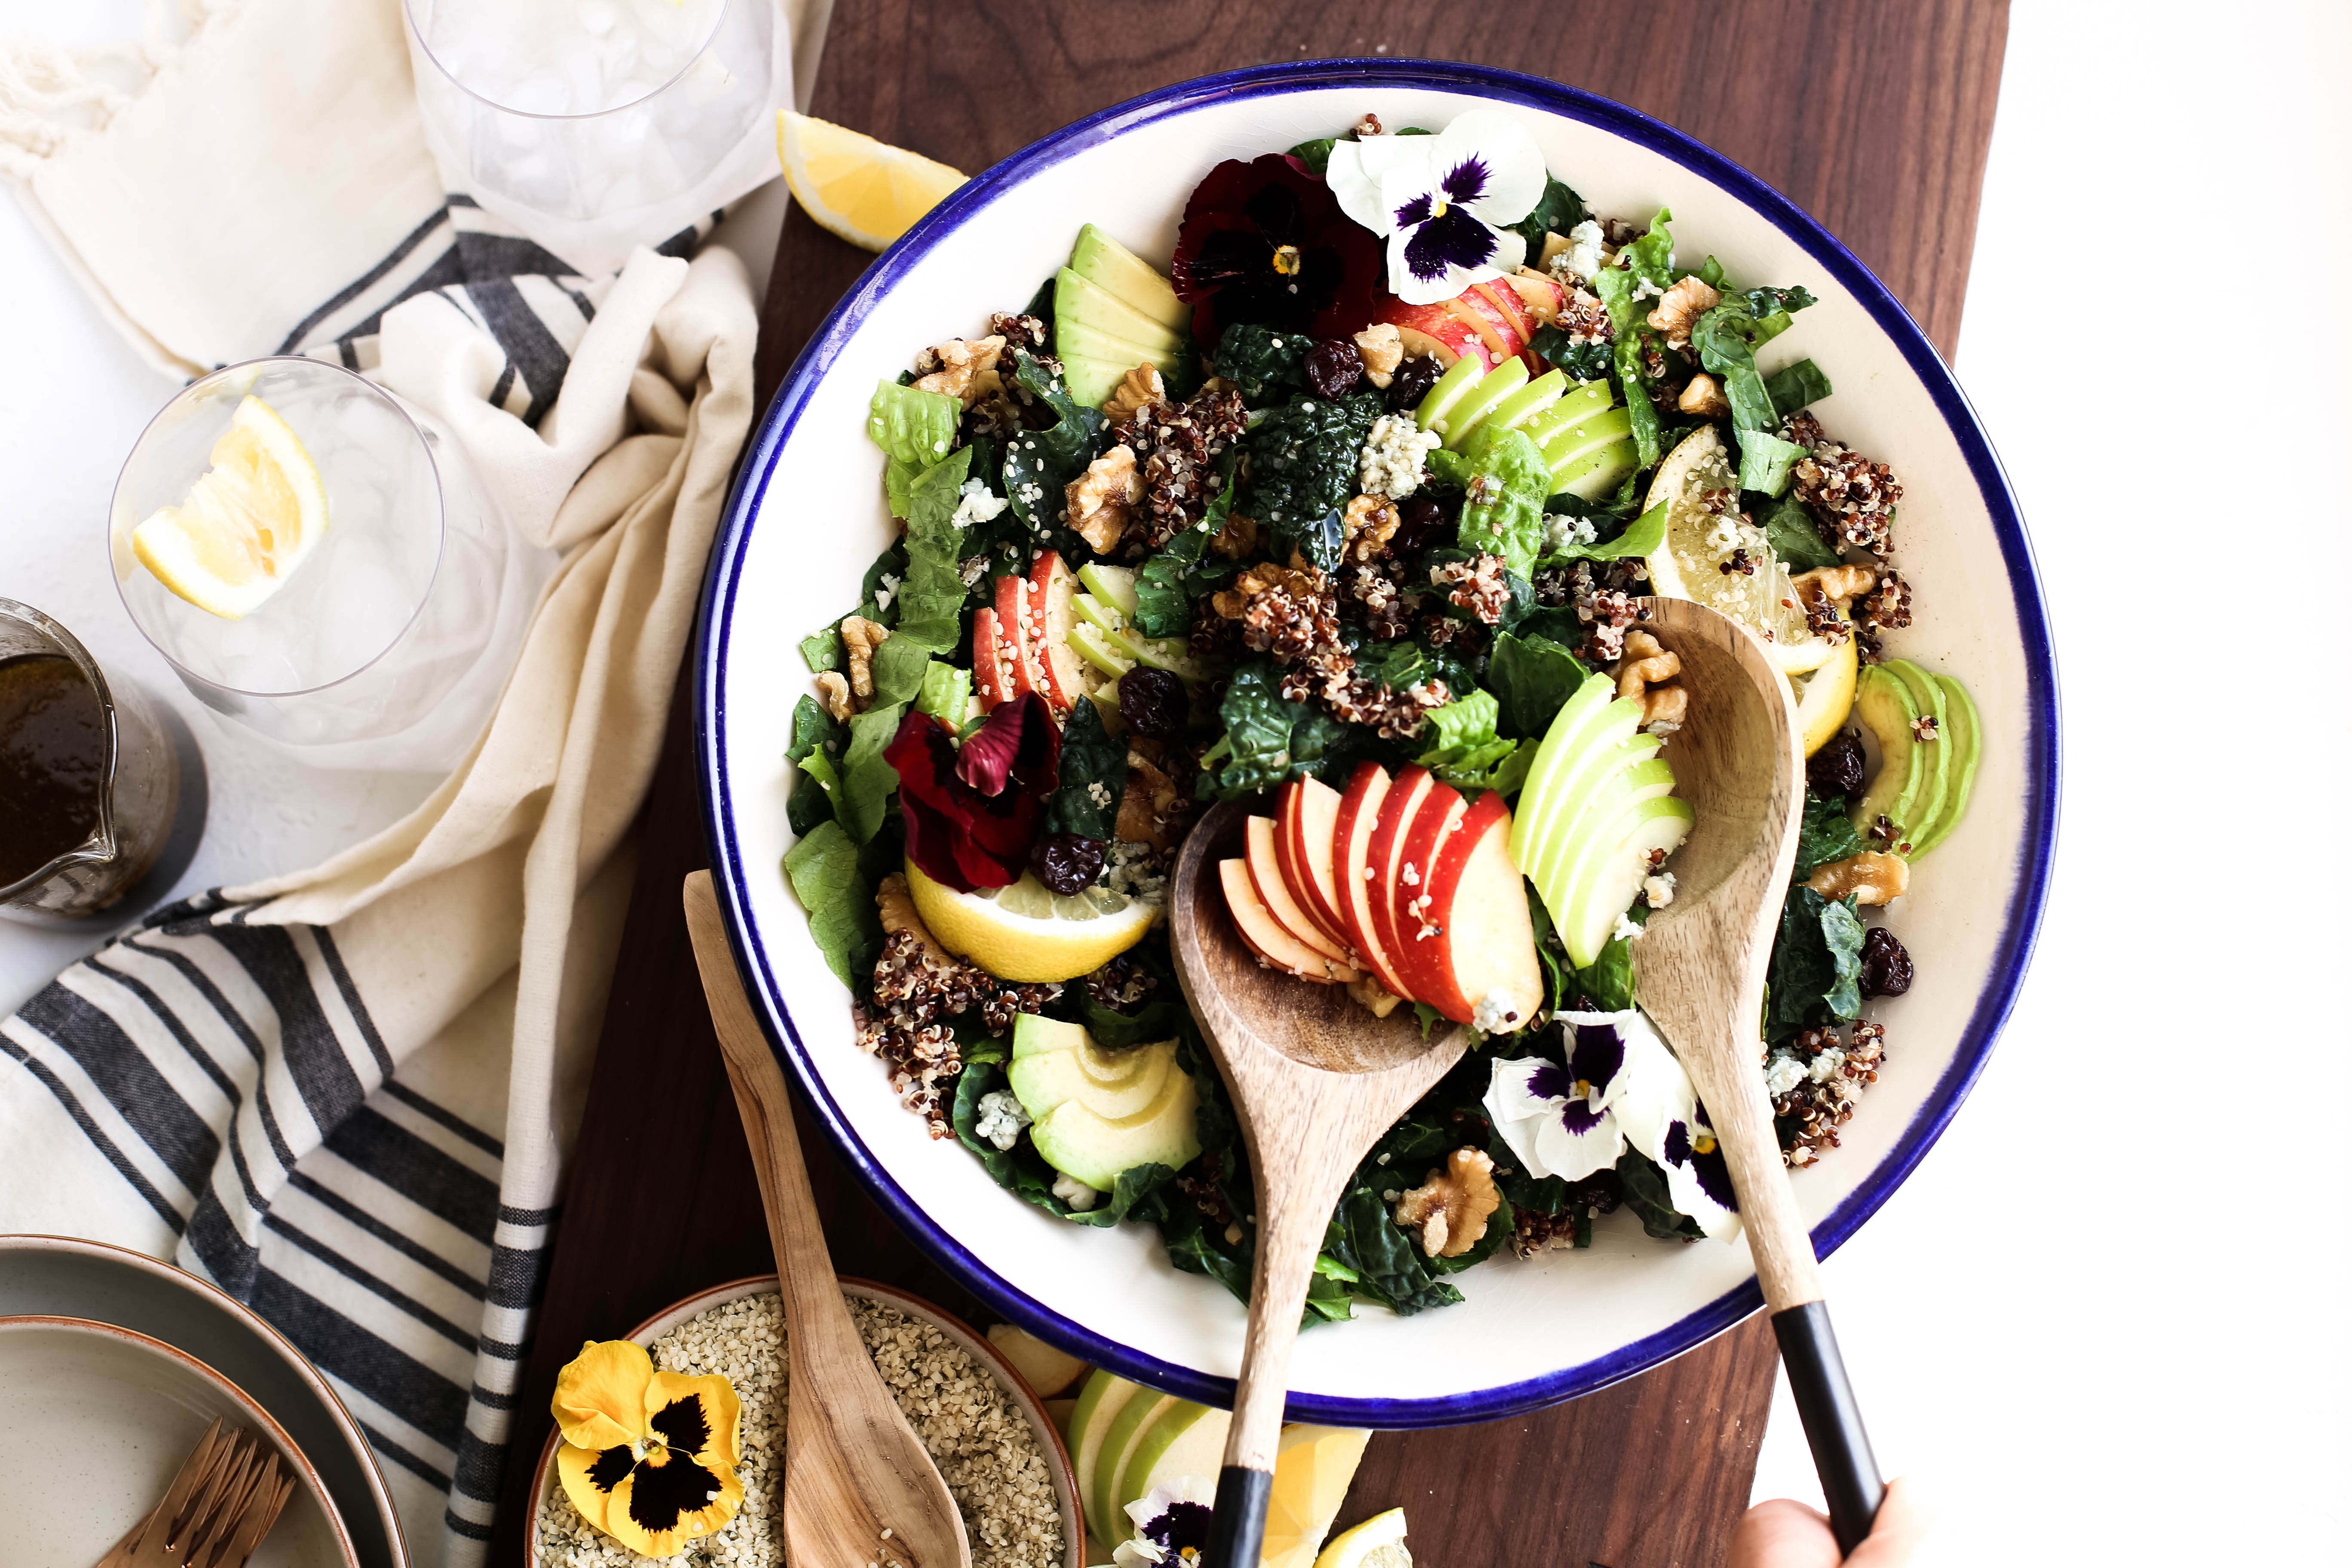 A Harvest Apple Quinoa Kale Salad To Kickstart A Healthy New Year